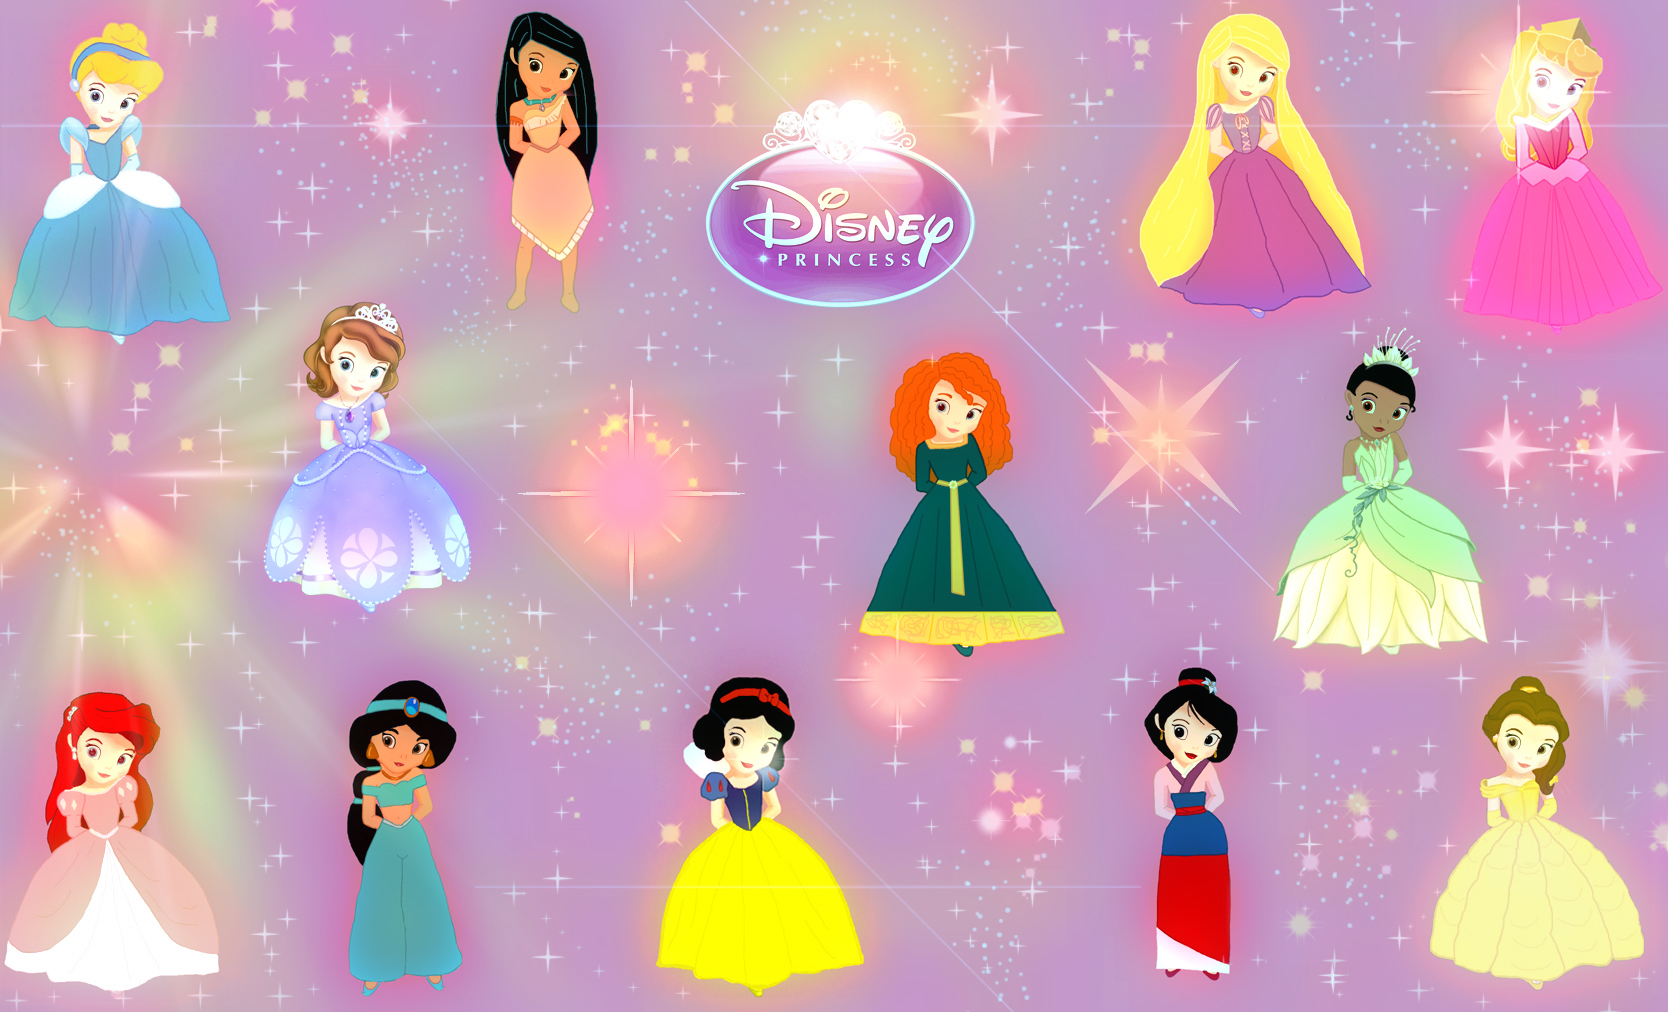 Little Disney Princess picture, Little Disney Princess wallpaper